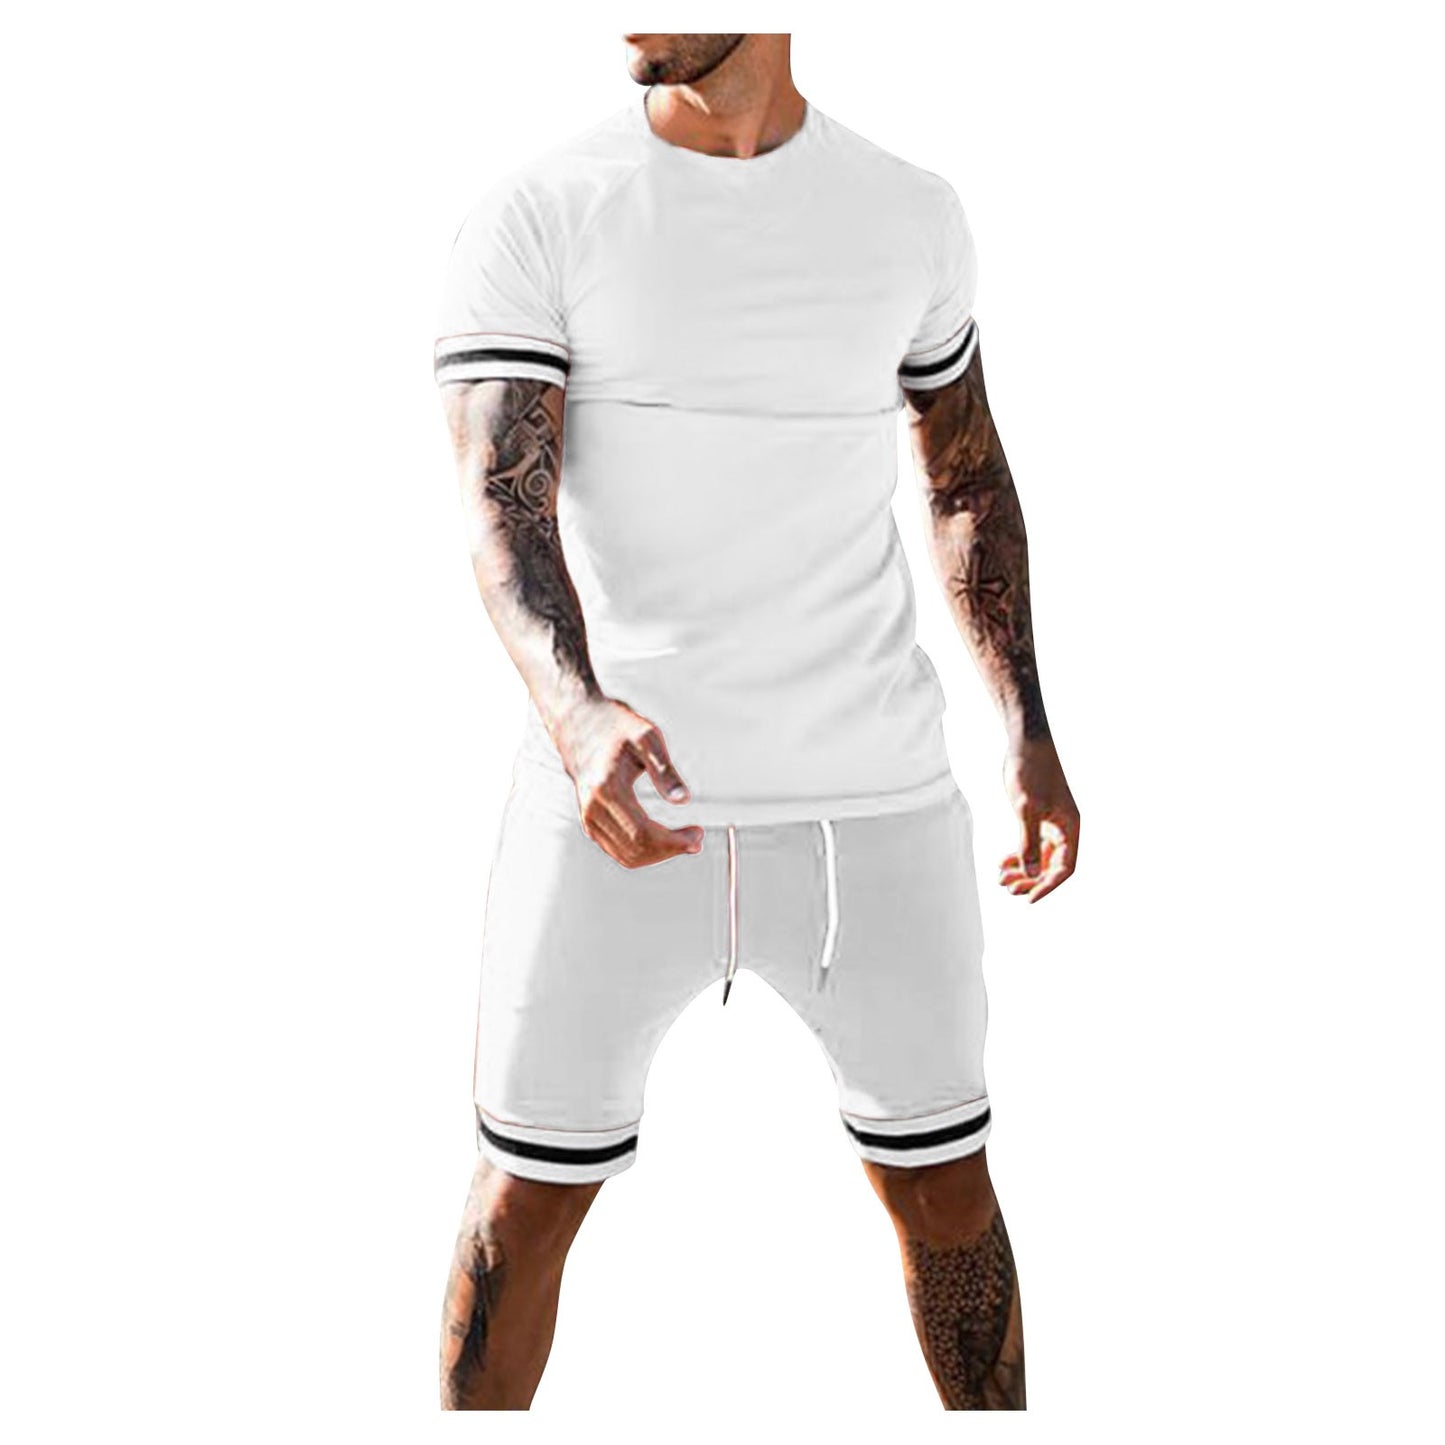 Men’s Tshirt Short Sleeve & Shorts Pants Sets